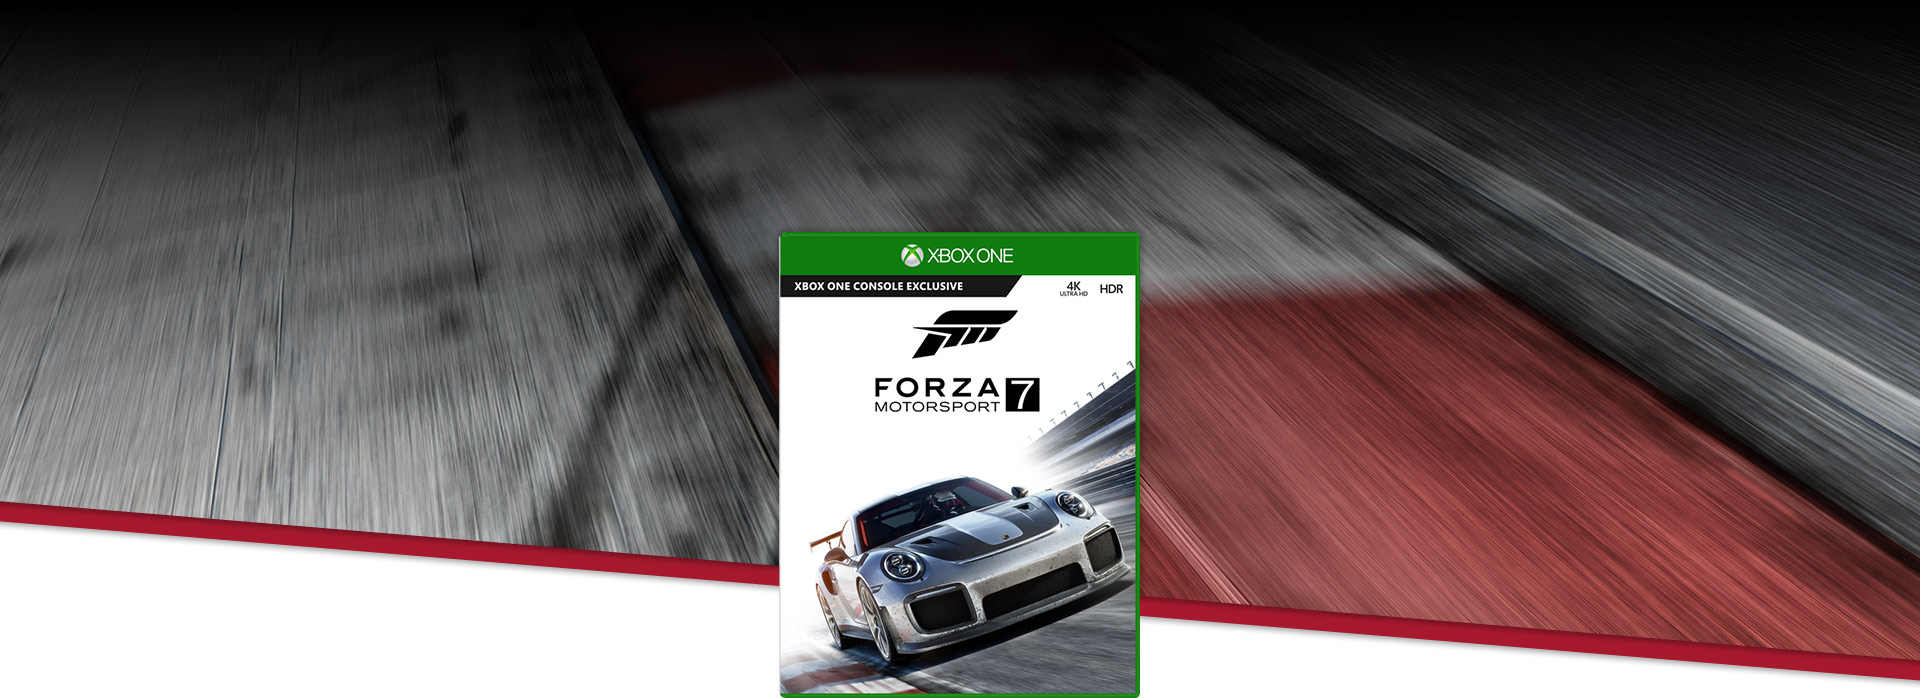 Forza Motorsport 7 Boxshot